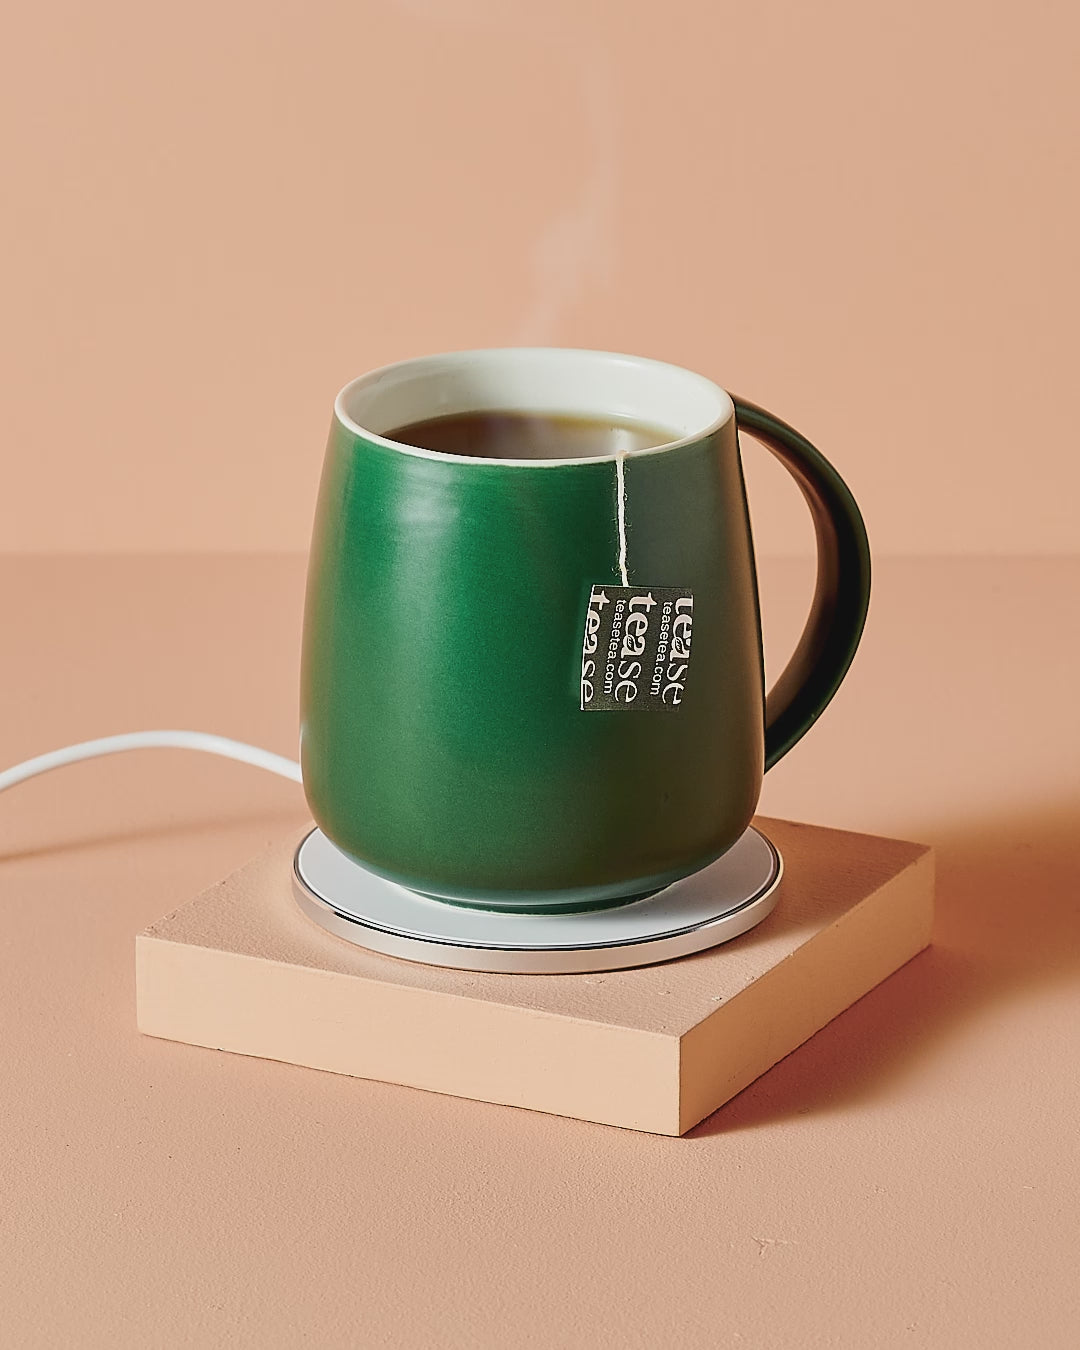 Electric Mug Warmer - The Tea Smith